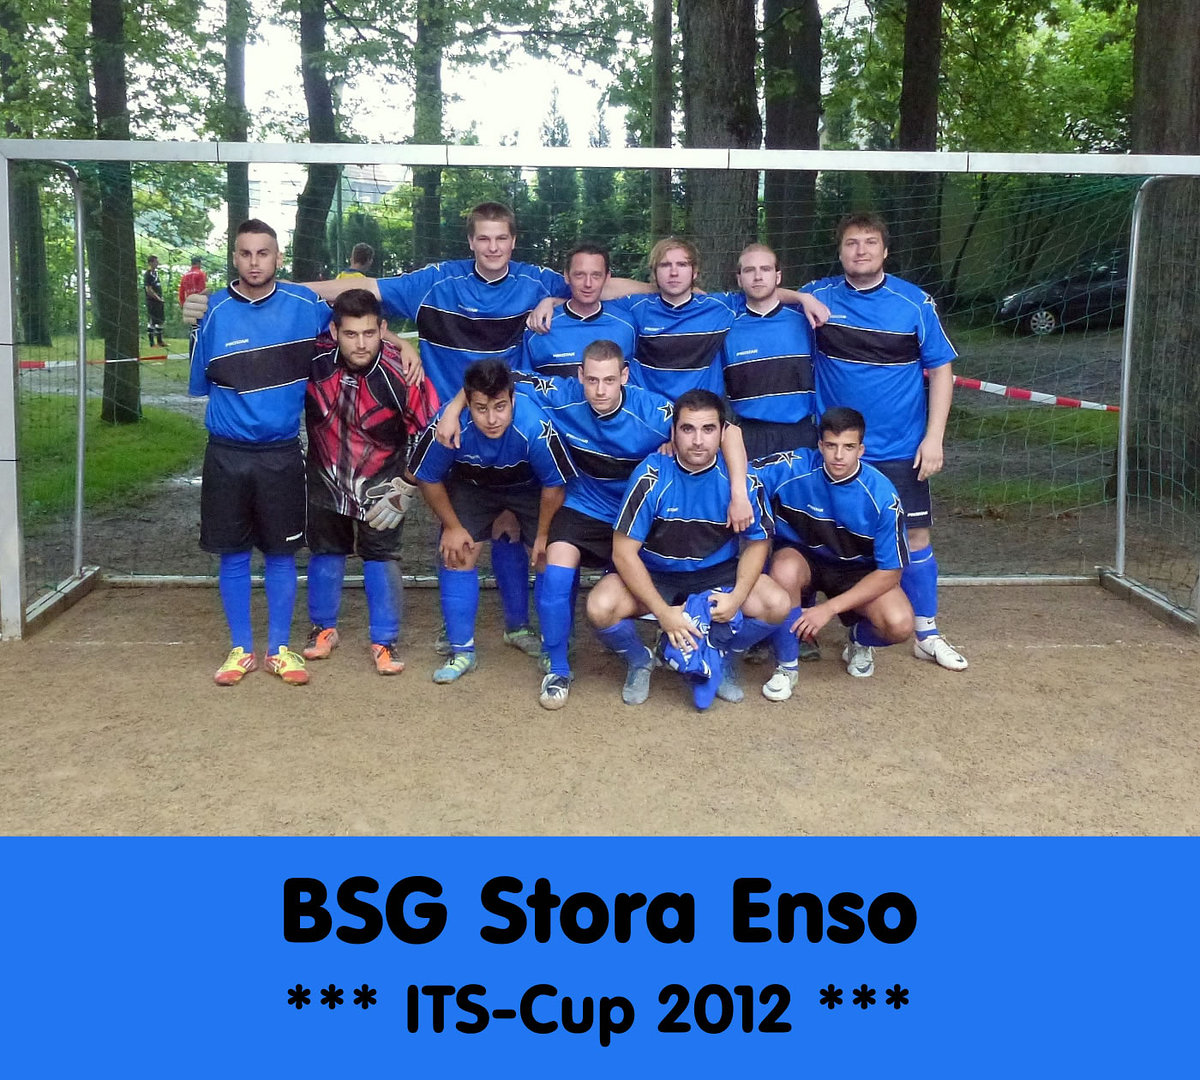 Its cup 2012   teamfotos   bsg stora enso retina